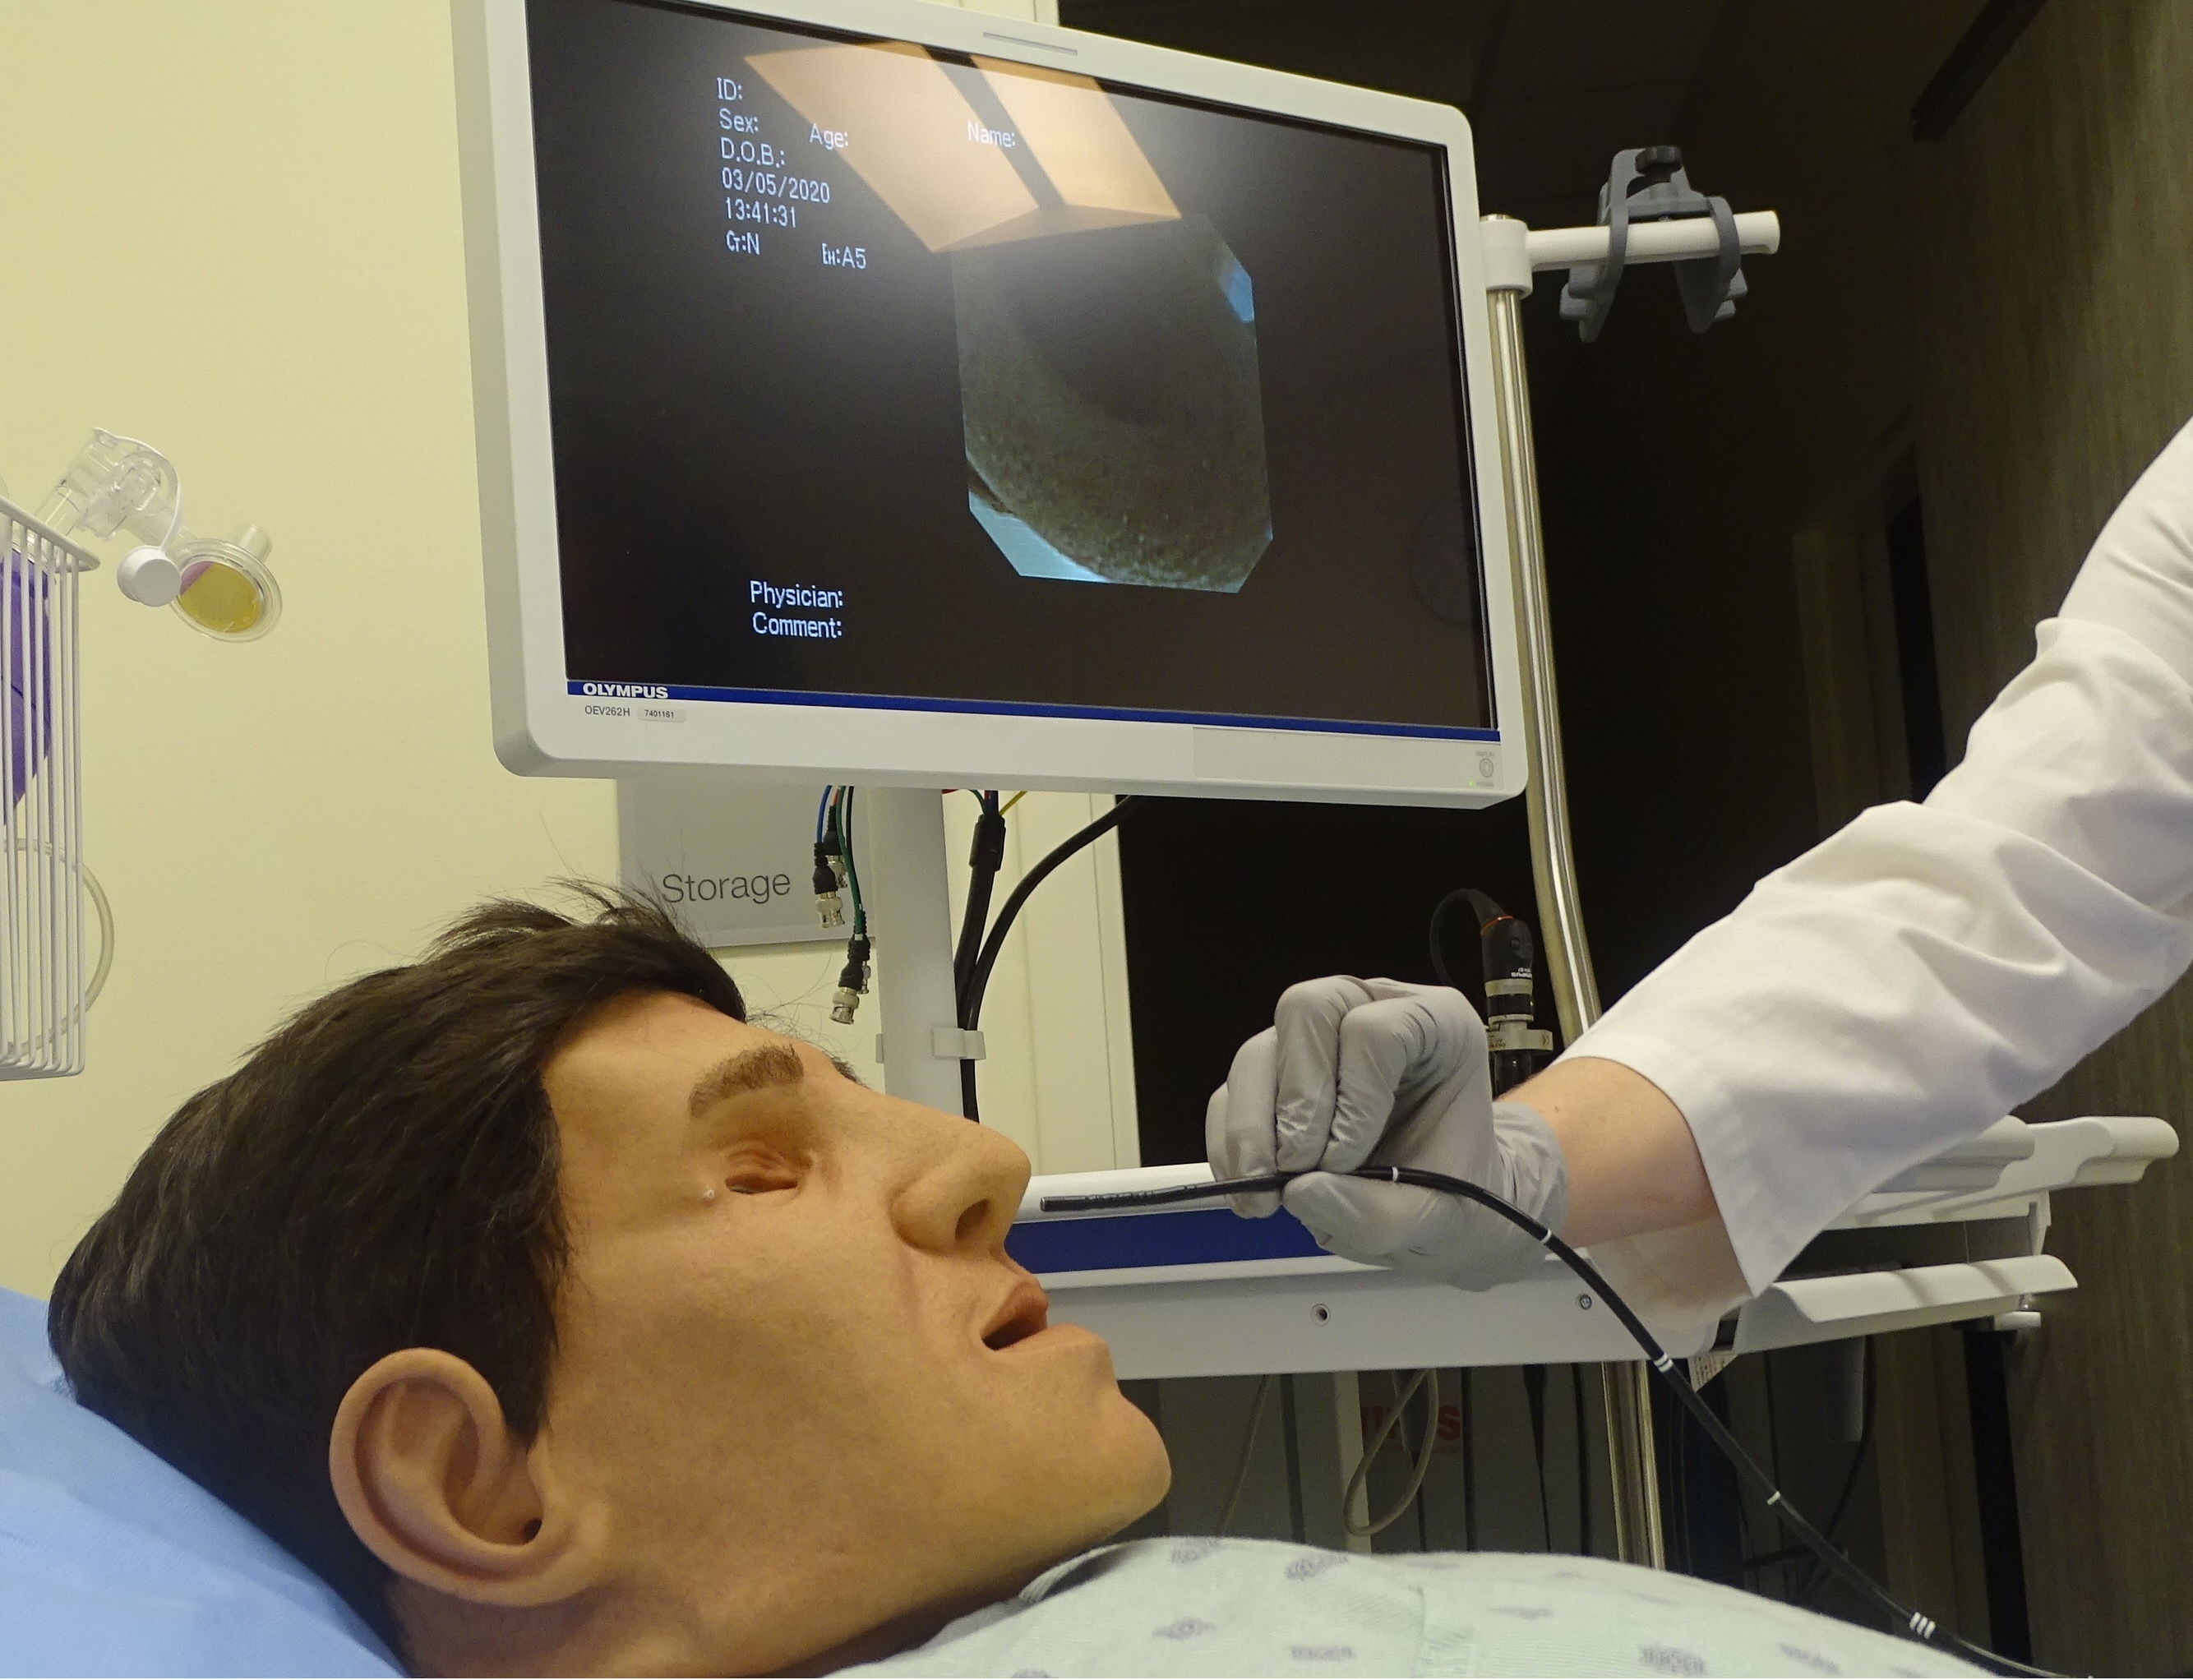 Nose Intubation simulation